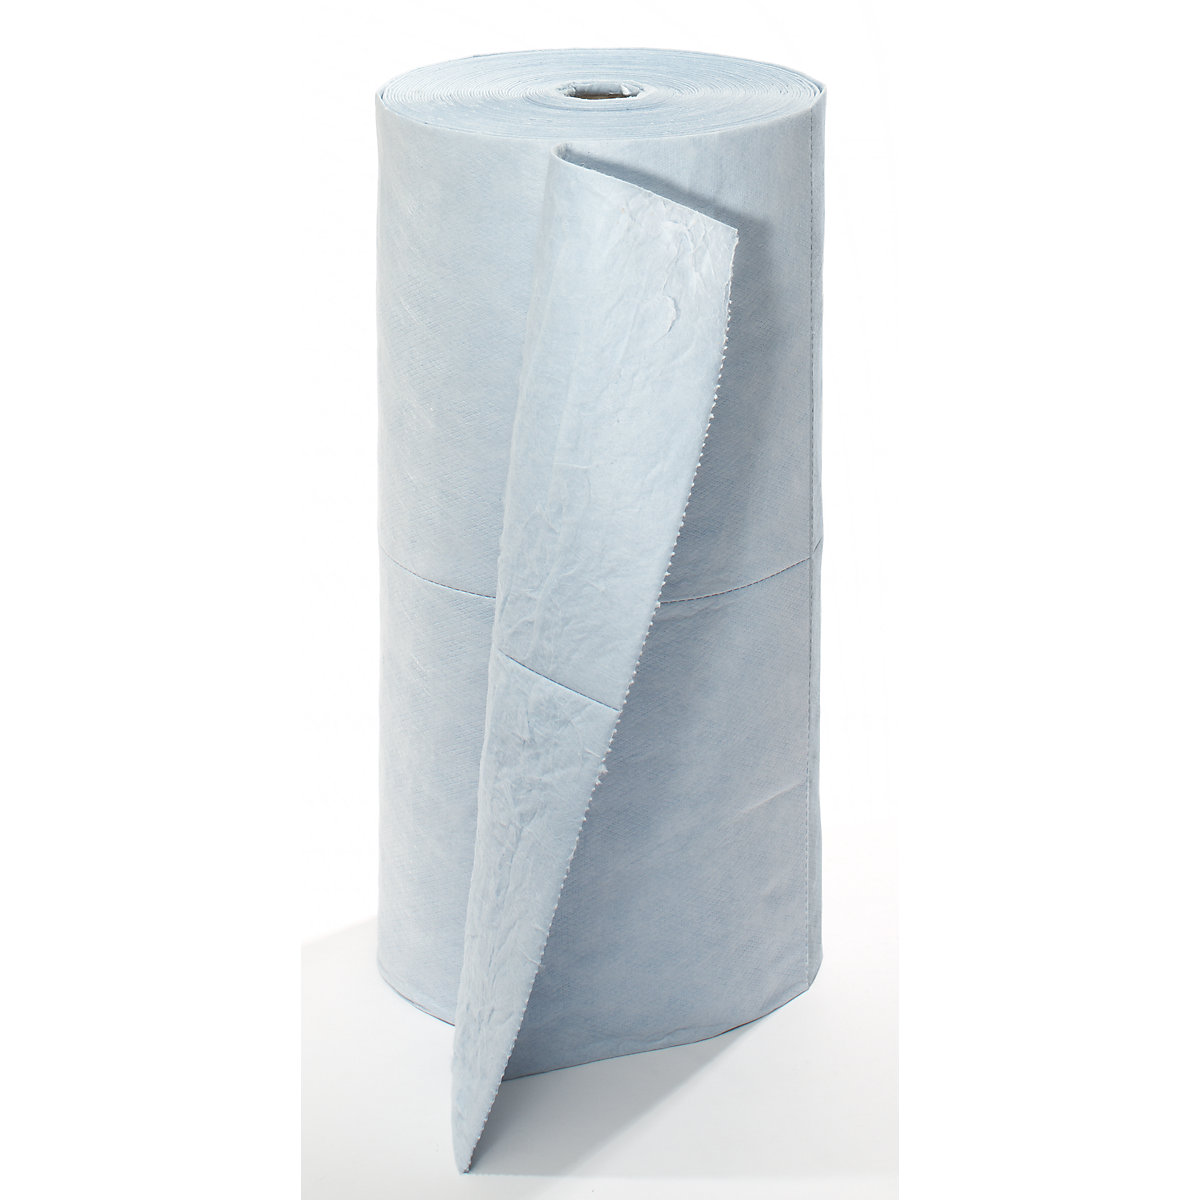 BASIC absorbent sheeting